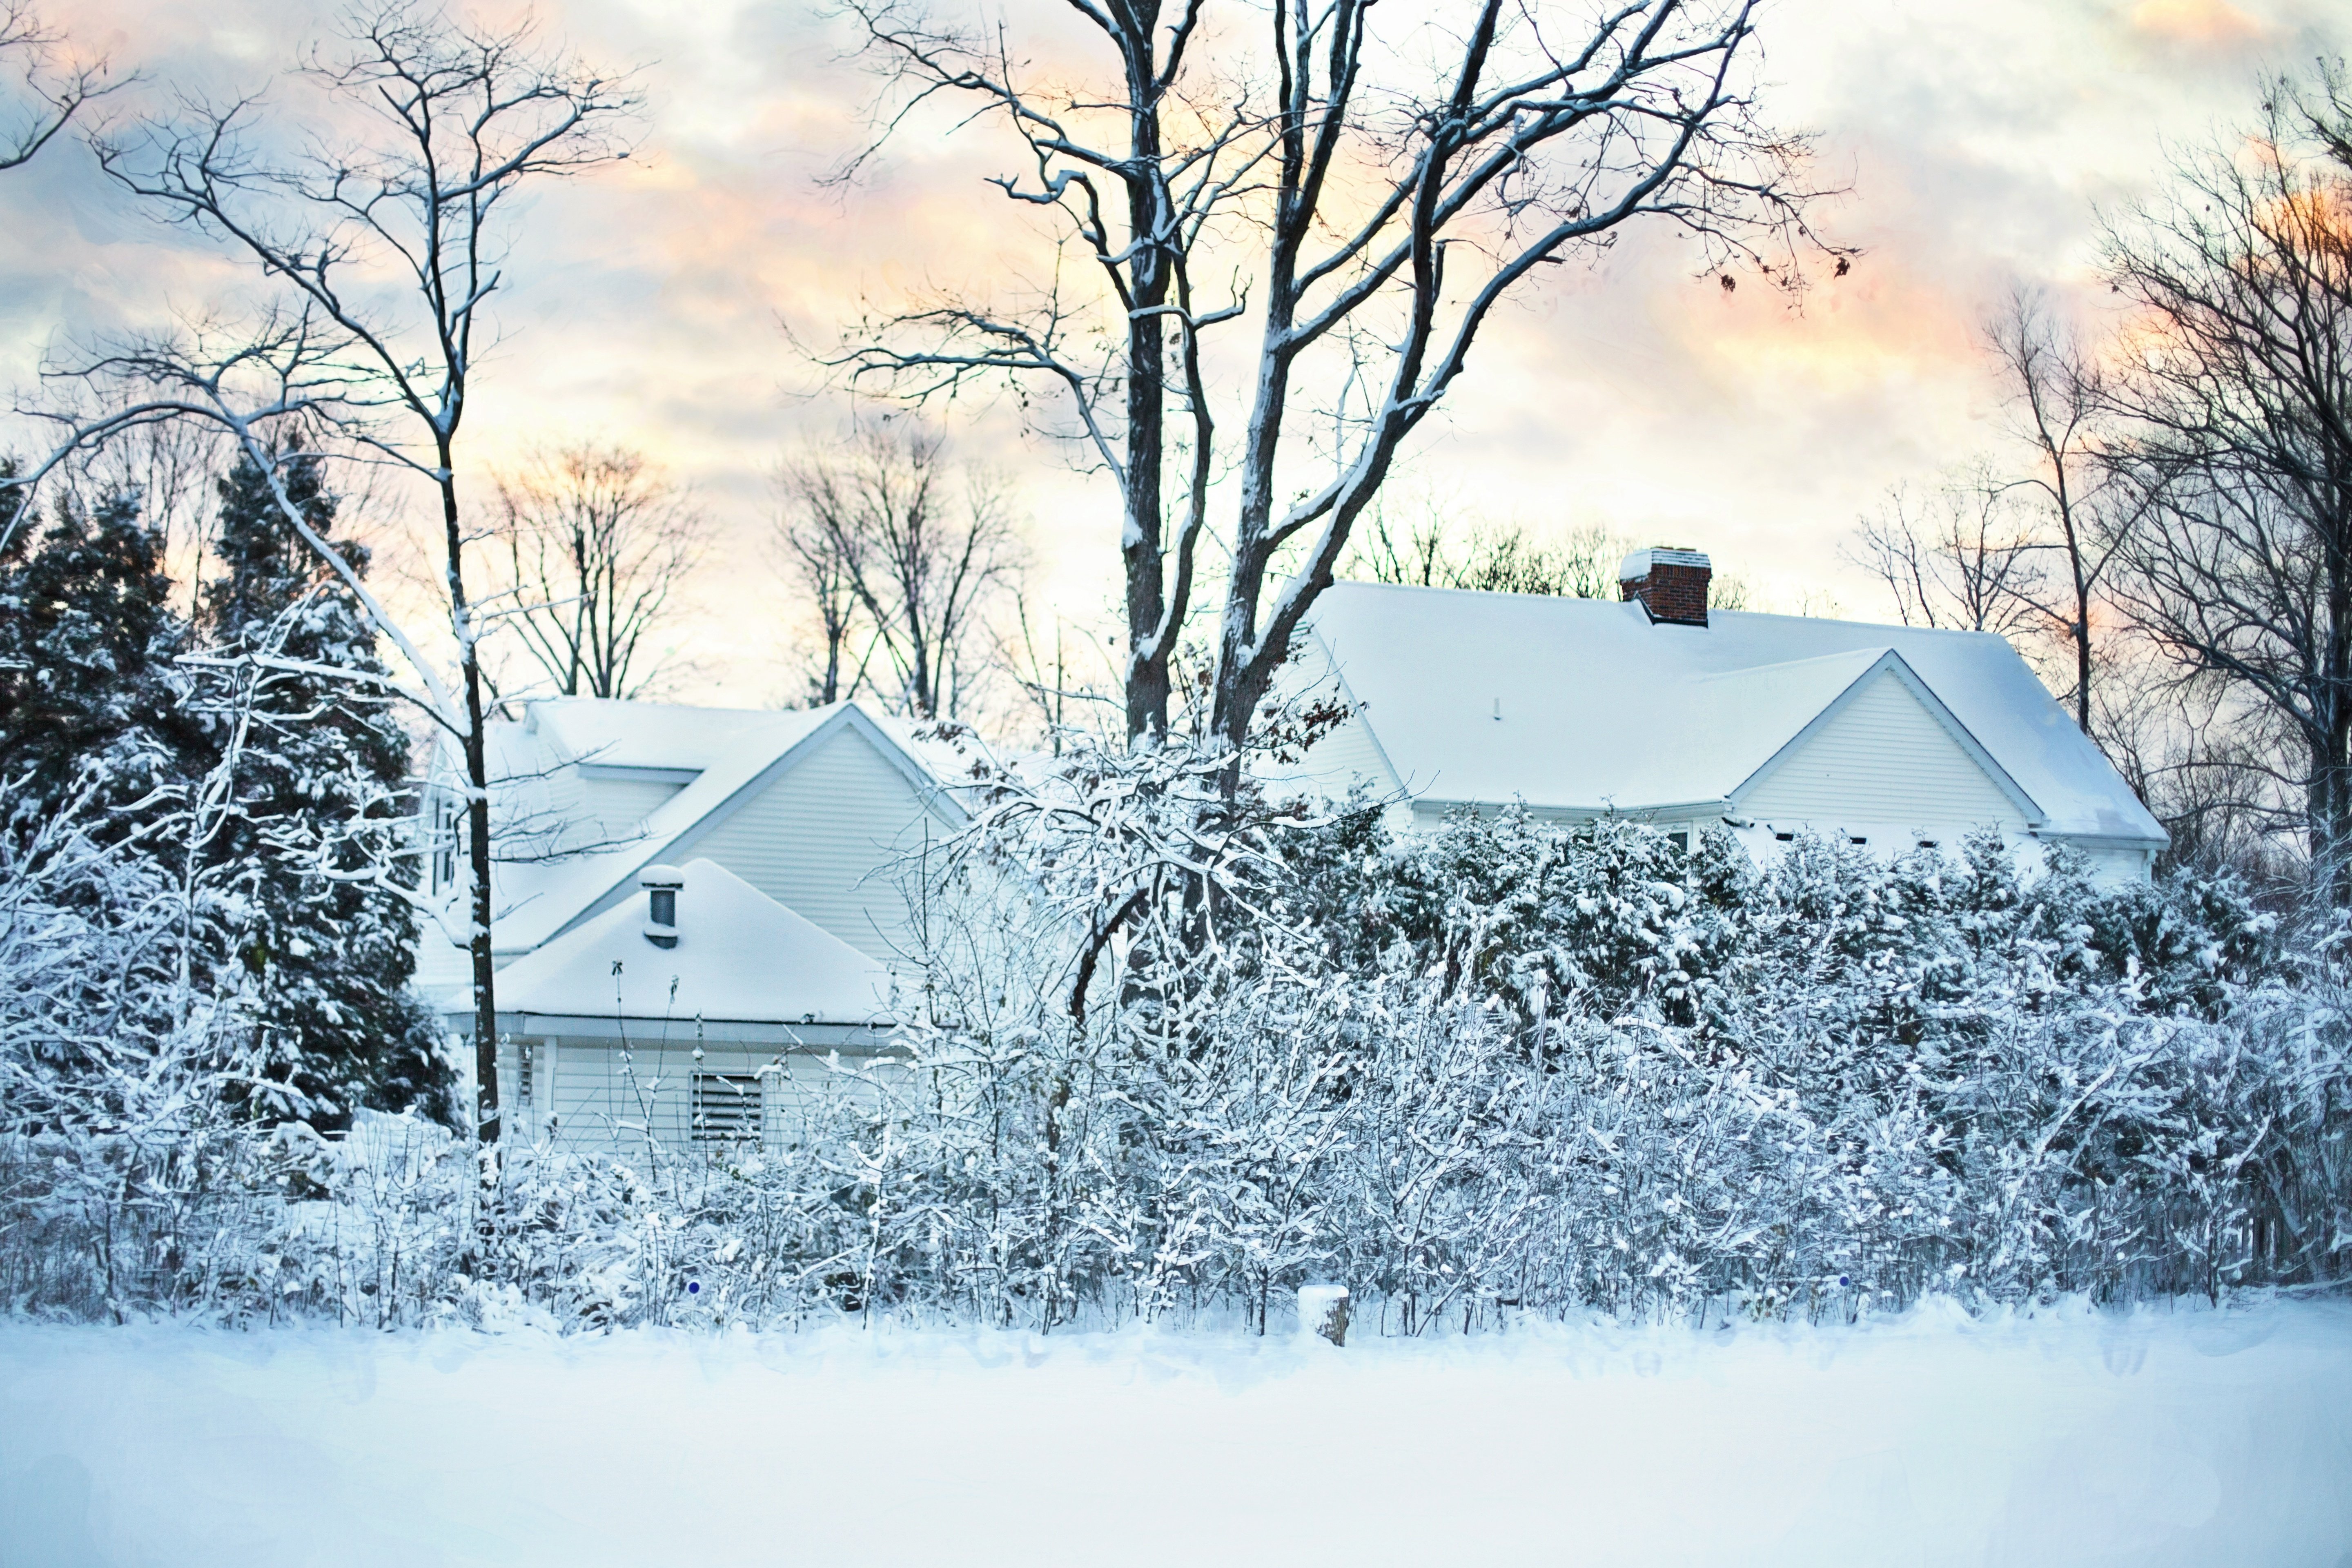 Снегом укрыты дома. Зима в деревне. Дом зимой. Деревня зимой. Зимний домик.